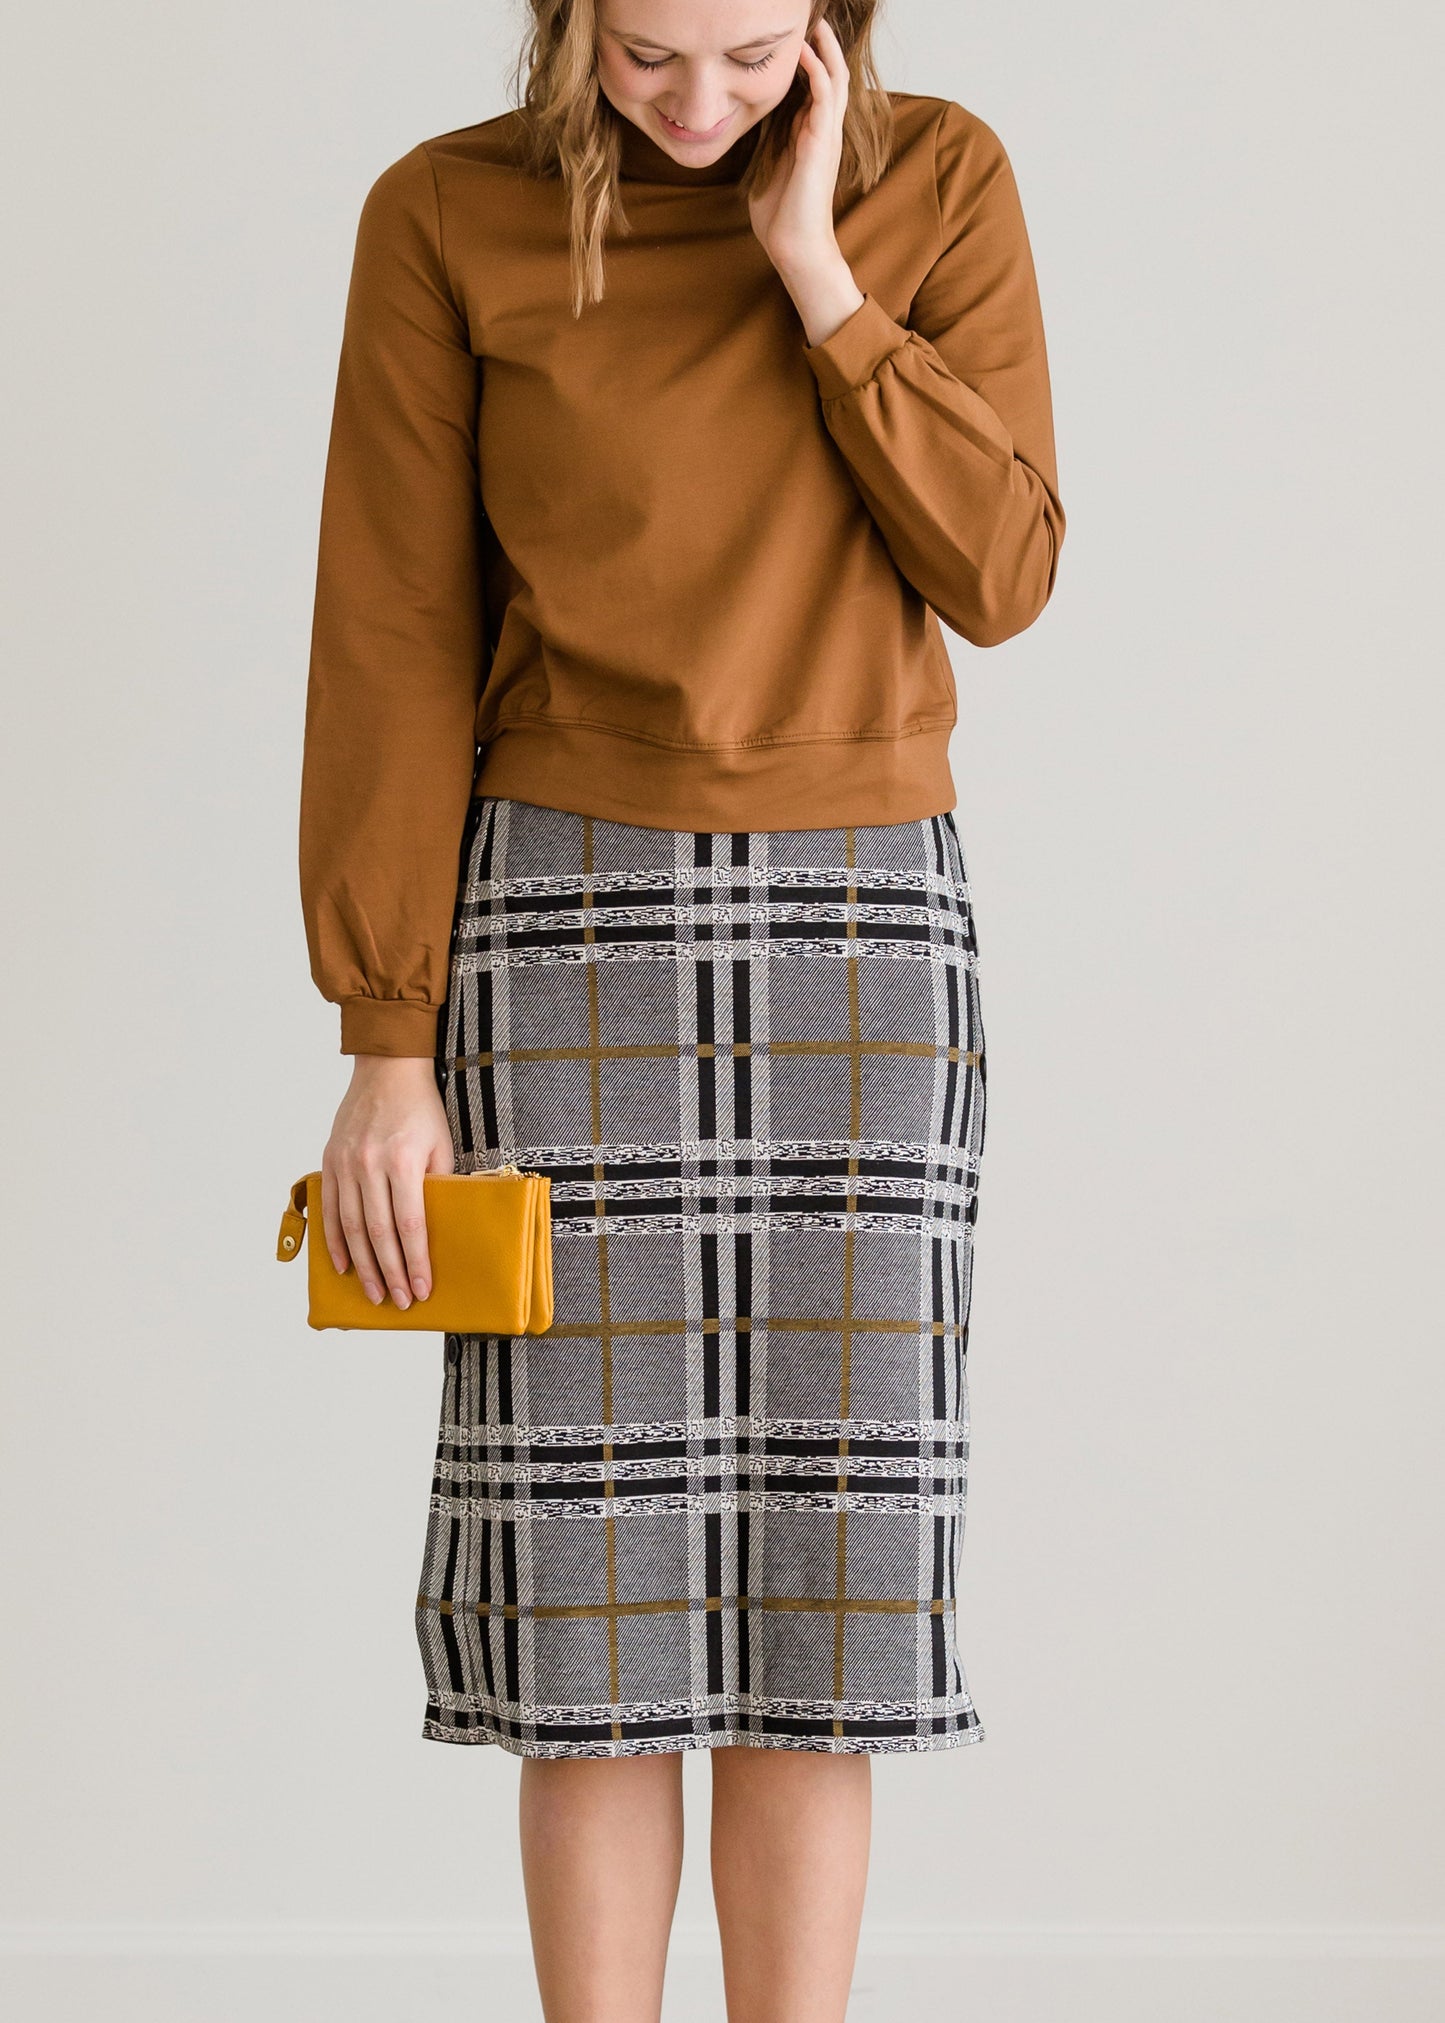 Plaid Stretch Waist Pencil Skirt - FINAL SALE Skirts